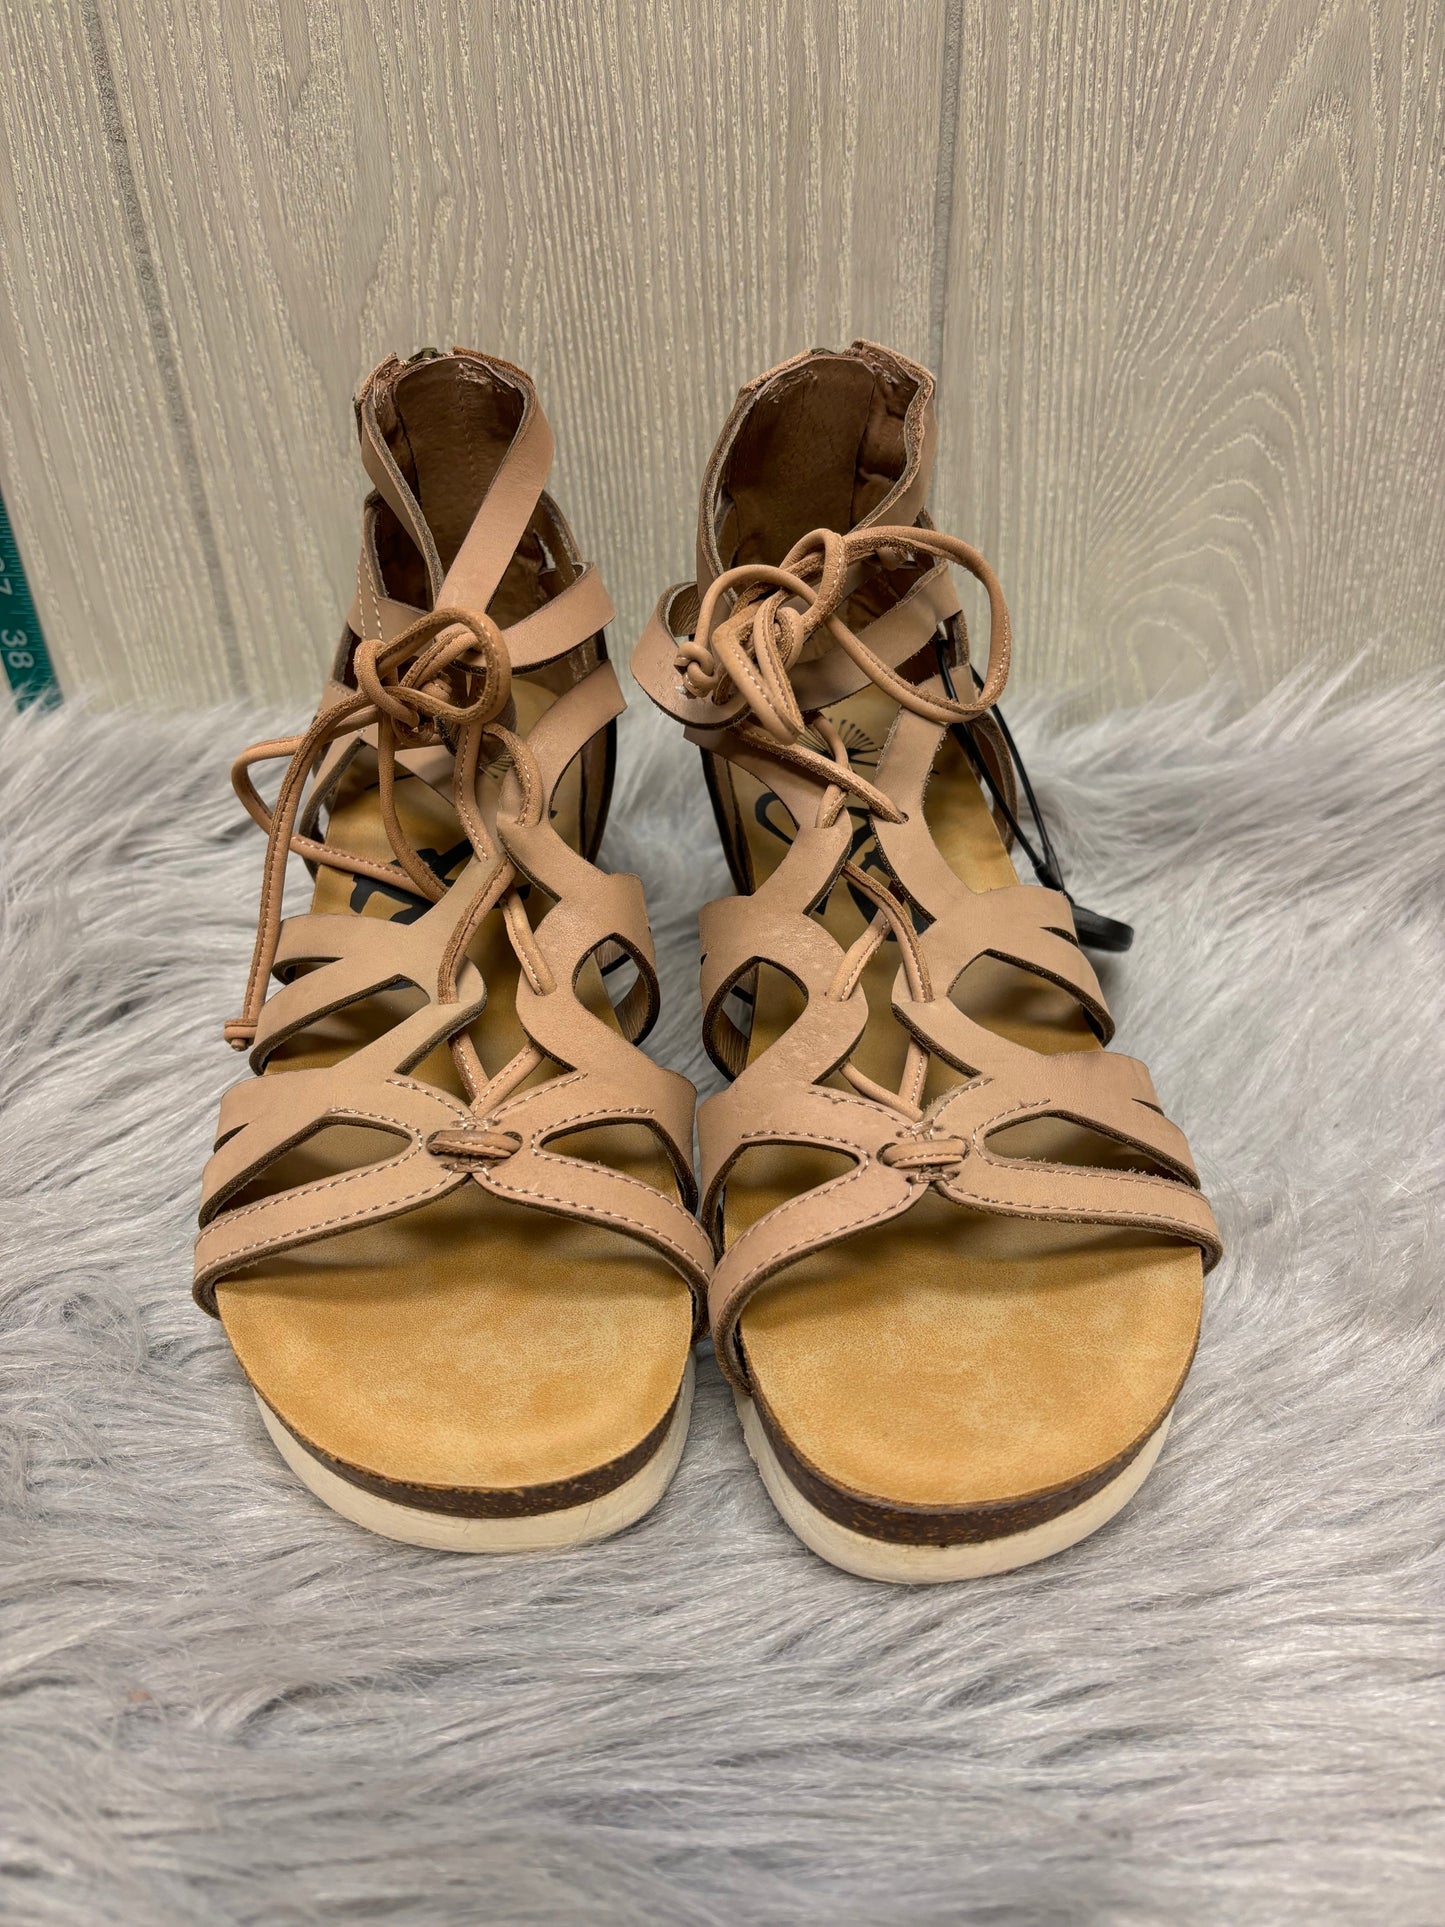 Tan Sandals Heels Wedge Otbt, Size 8